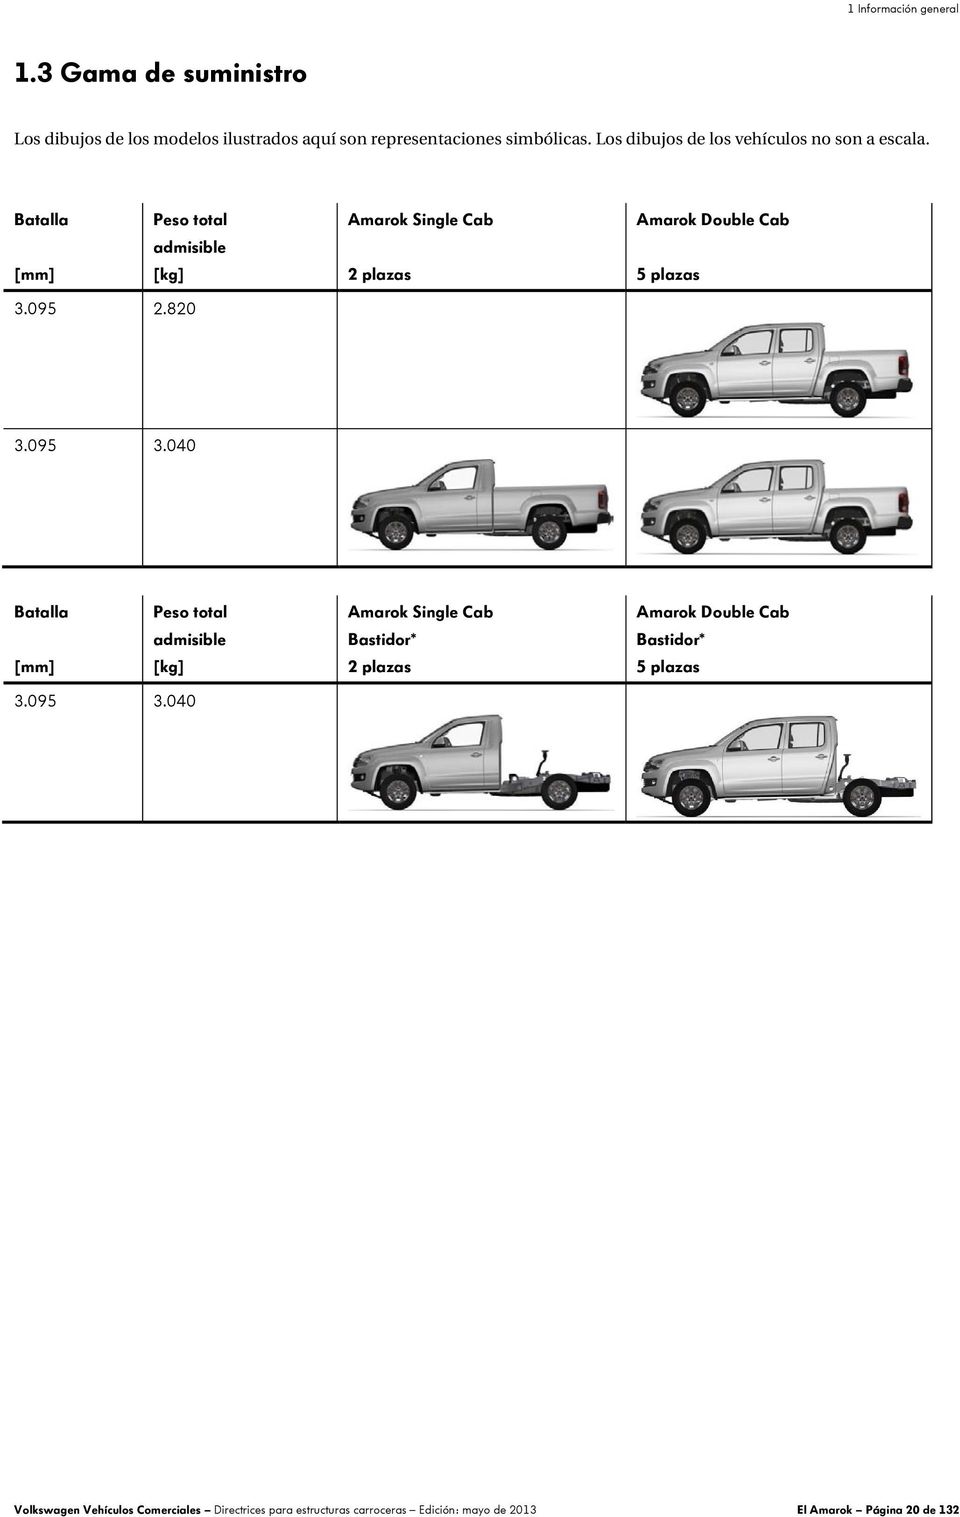 Batalla Peso total Amarok Single Cab Amarok Double Cab admisible [mm] [kg] 2 plazas 5 plazas 3.095 2.820 3.095 3.